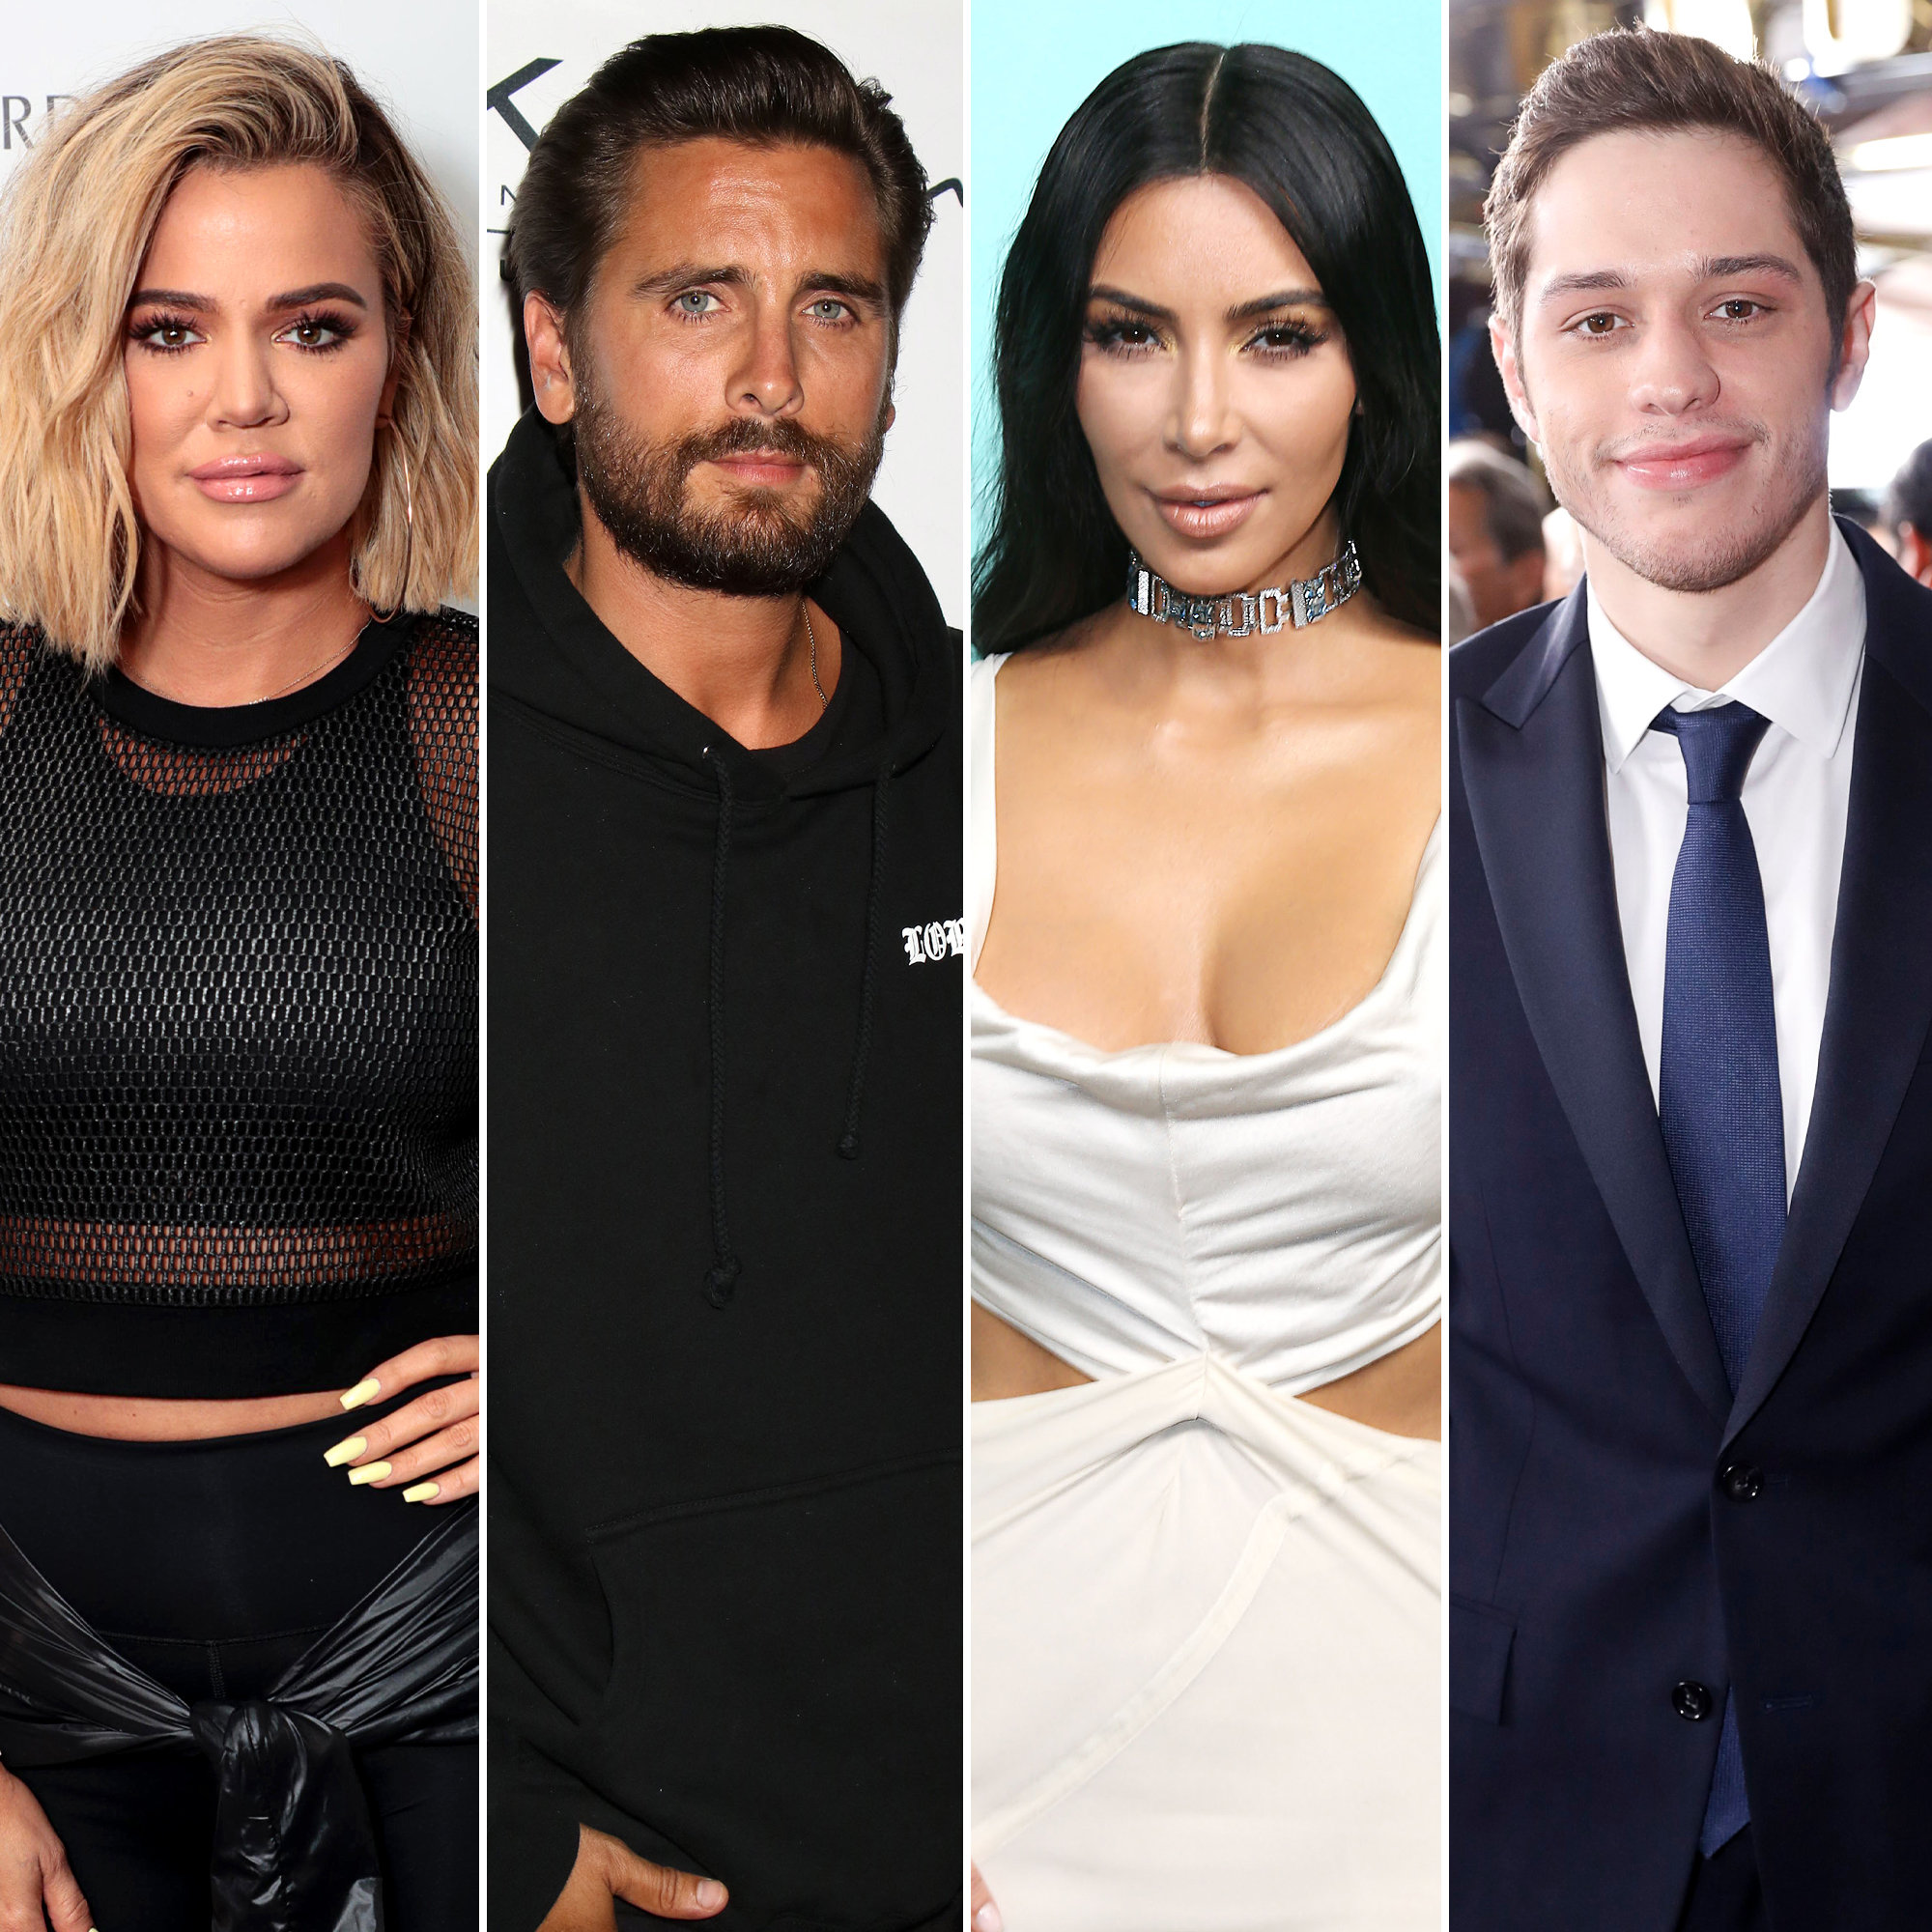 Kim Kardashian, Pete Davidson Are Instagram Official: Family